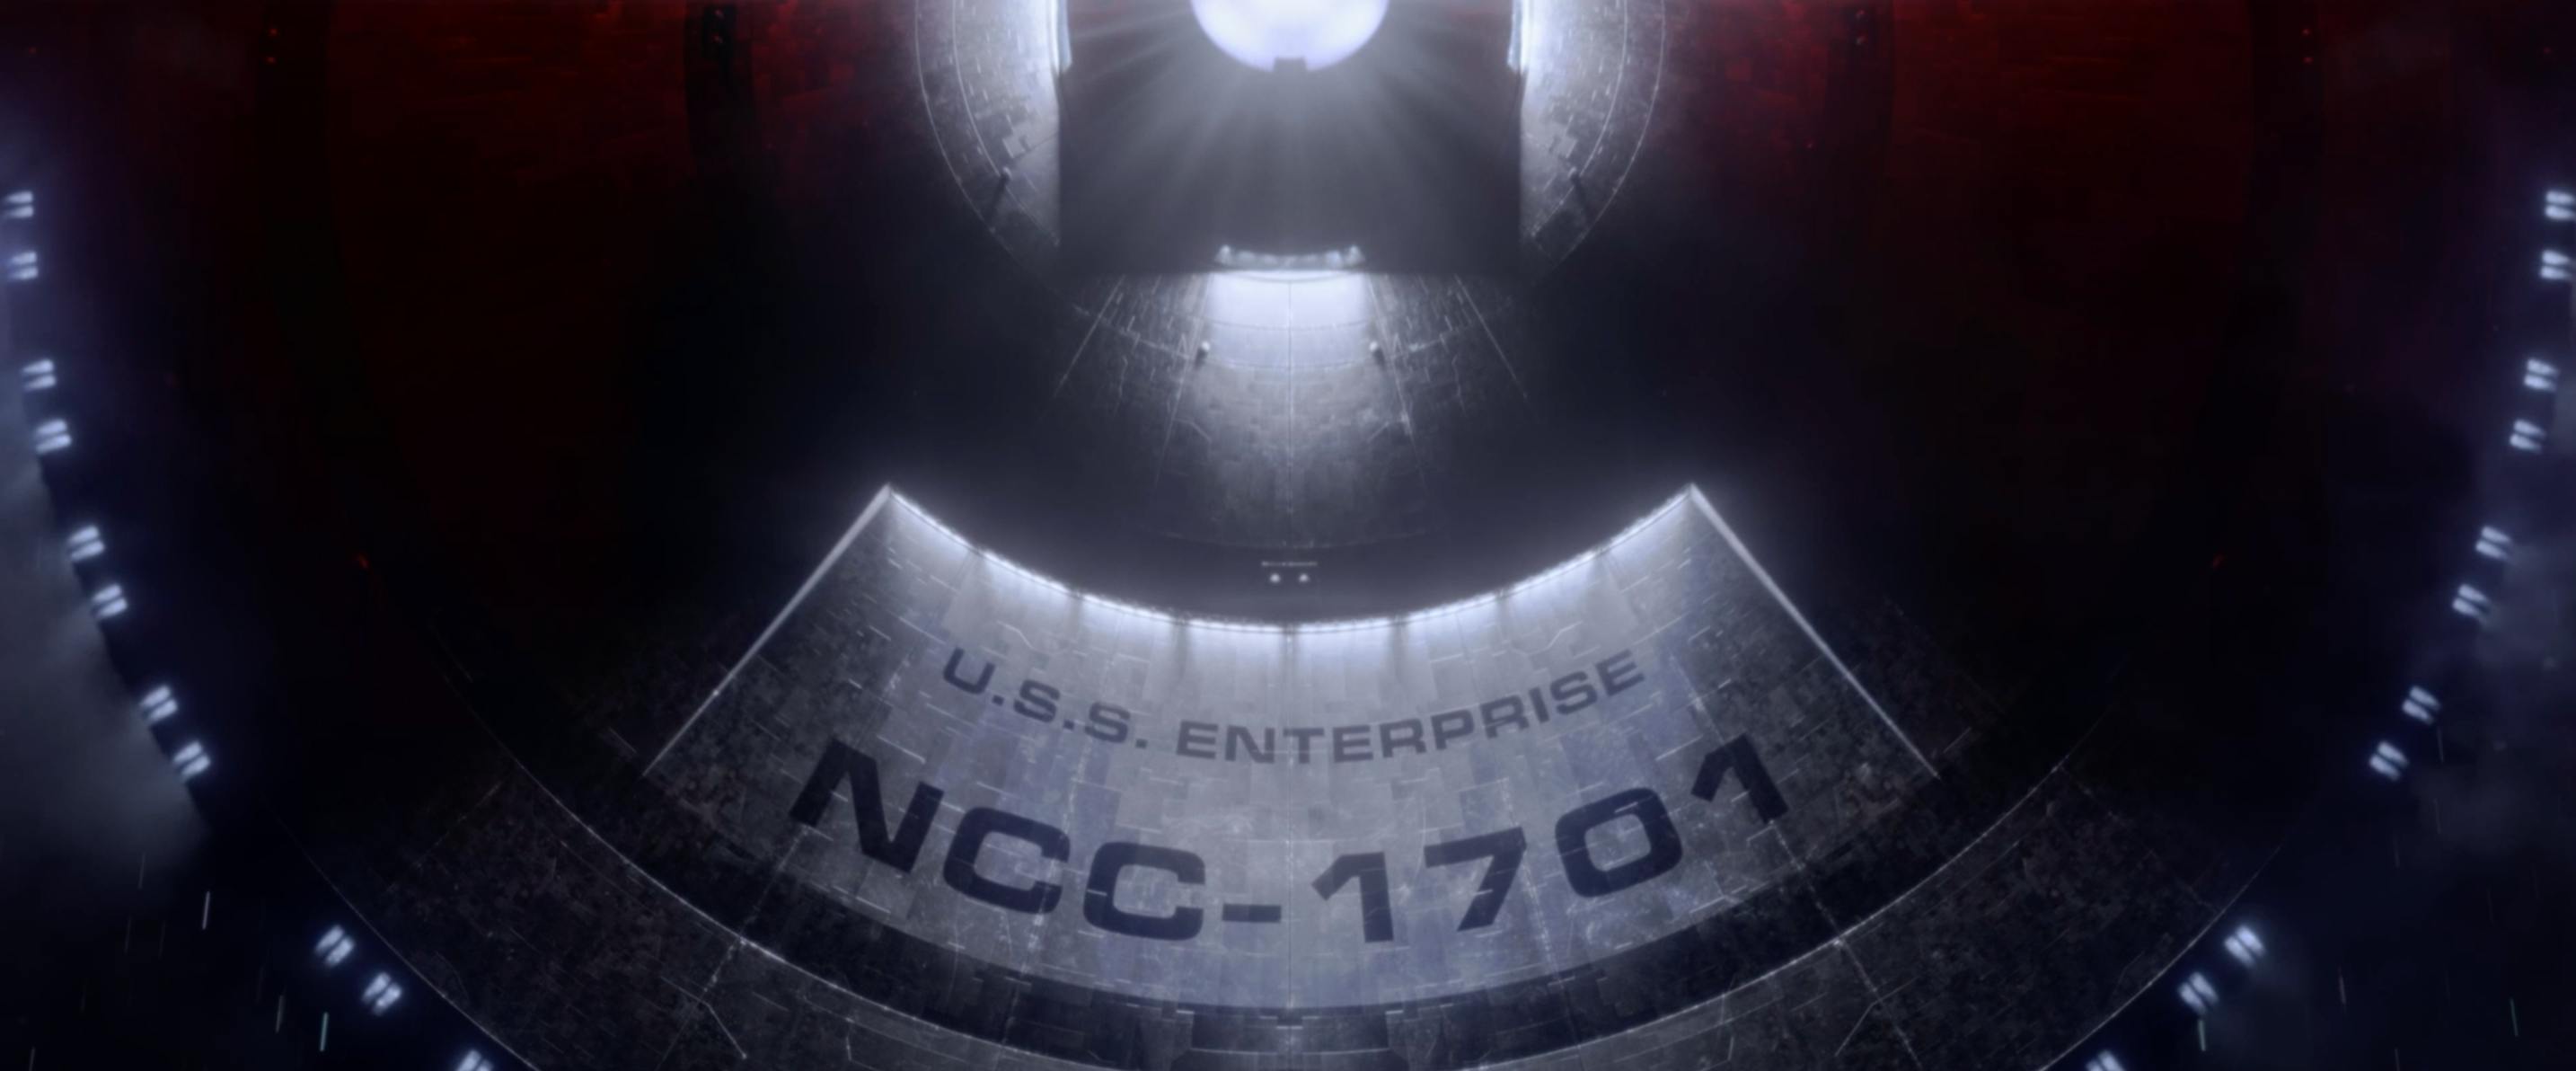 The Enterprise saucer with "U.S.S. Enterprise NCC-1701" displayed. 